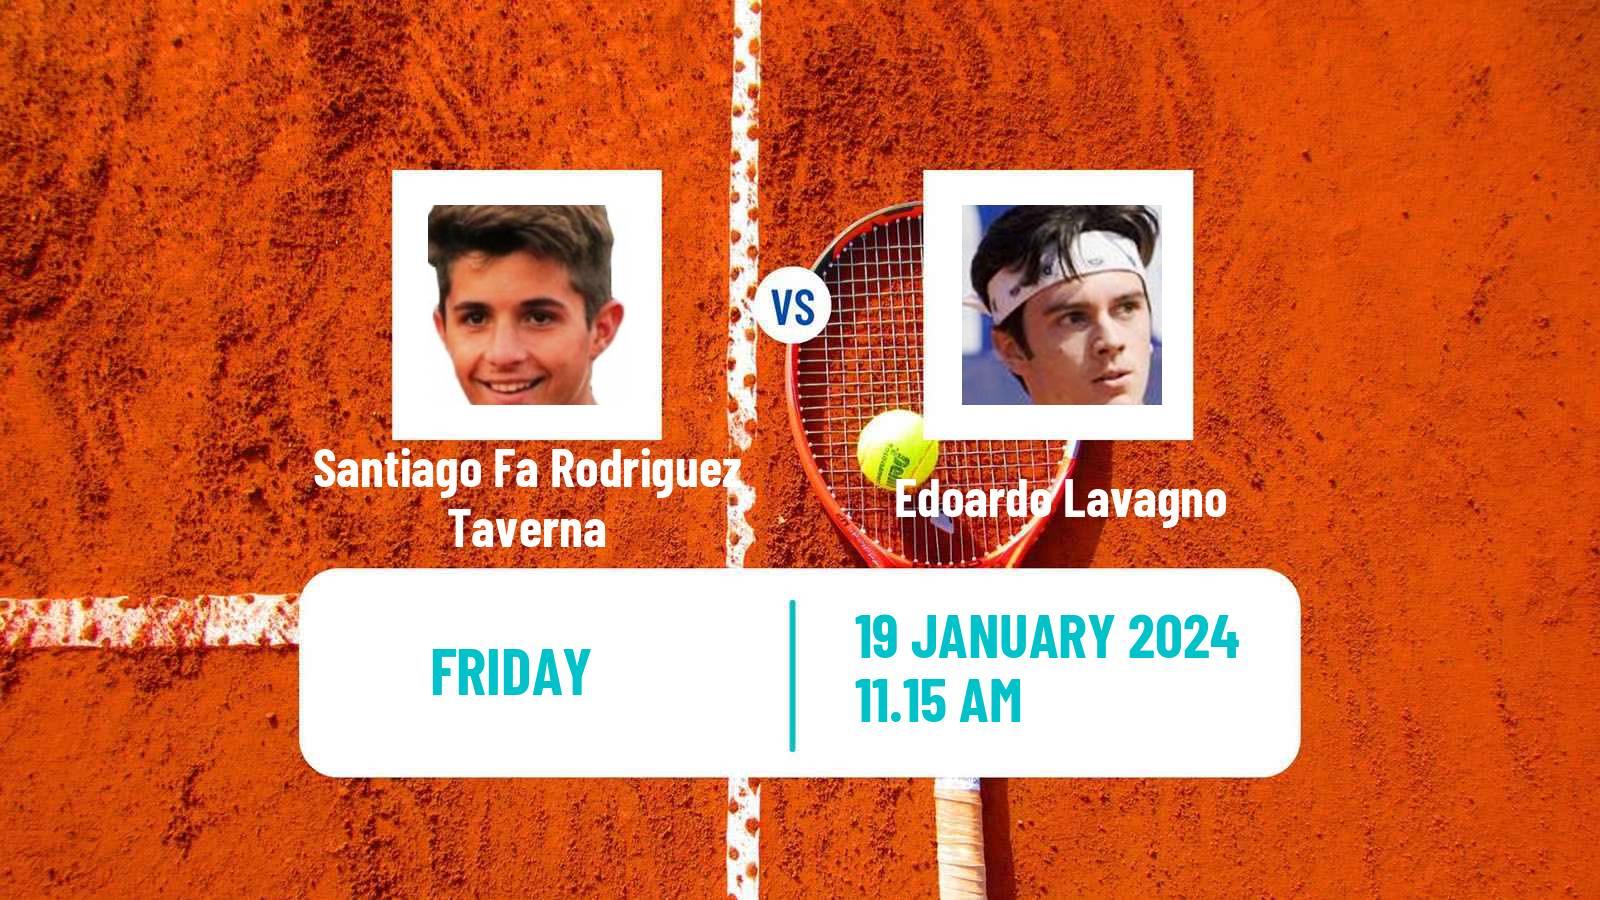 Tennis Buenos Aires 2 Challenger Men Santiago Fa Rodriguez Taverna - Edoardo Lavagno